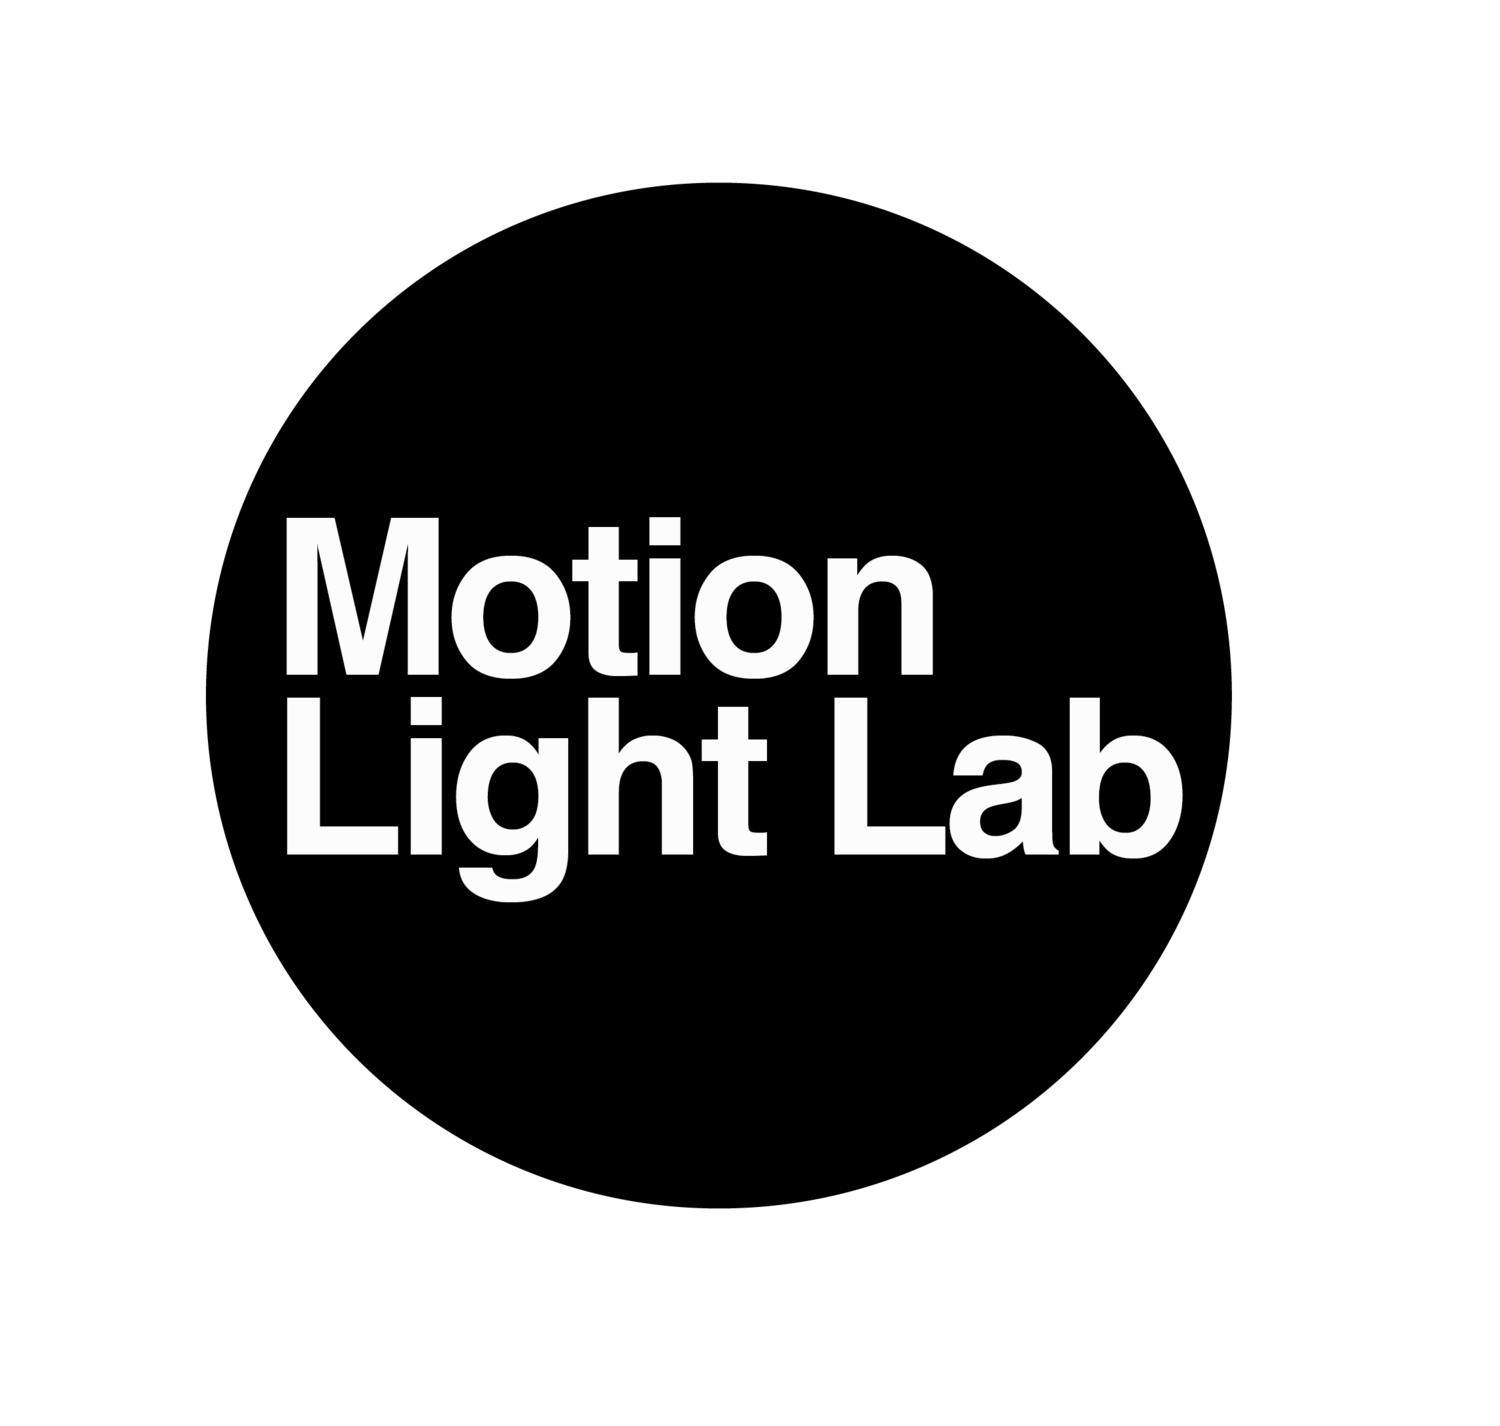 Motion Light Lab